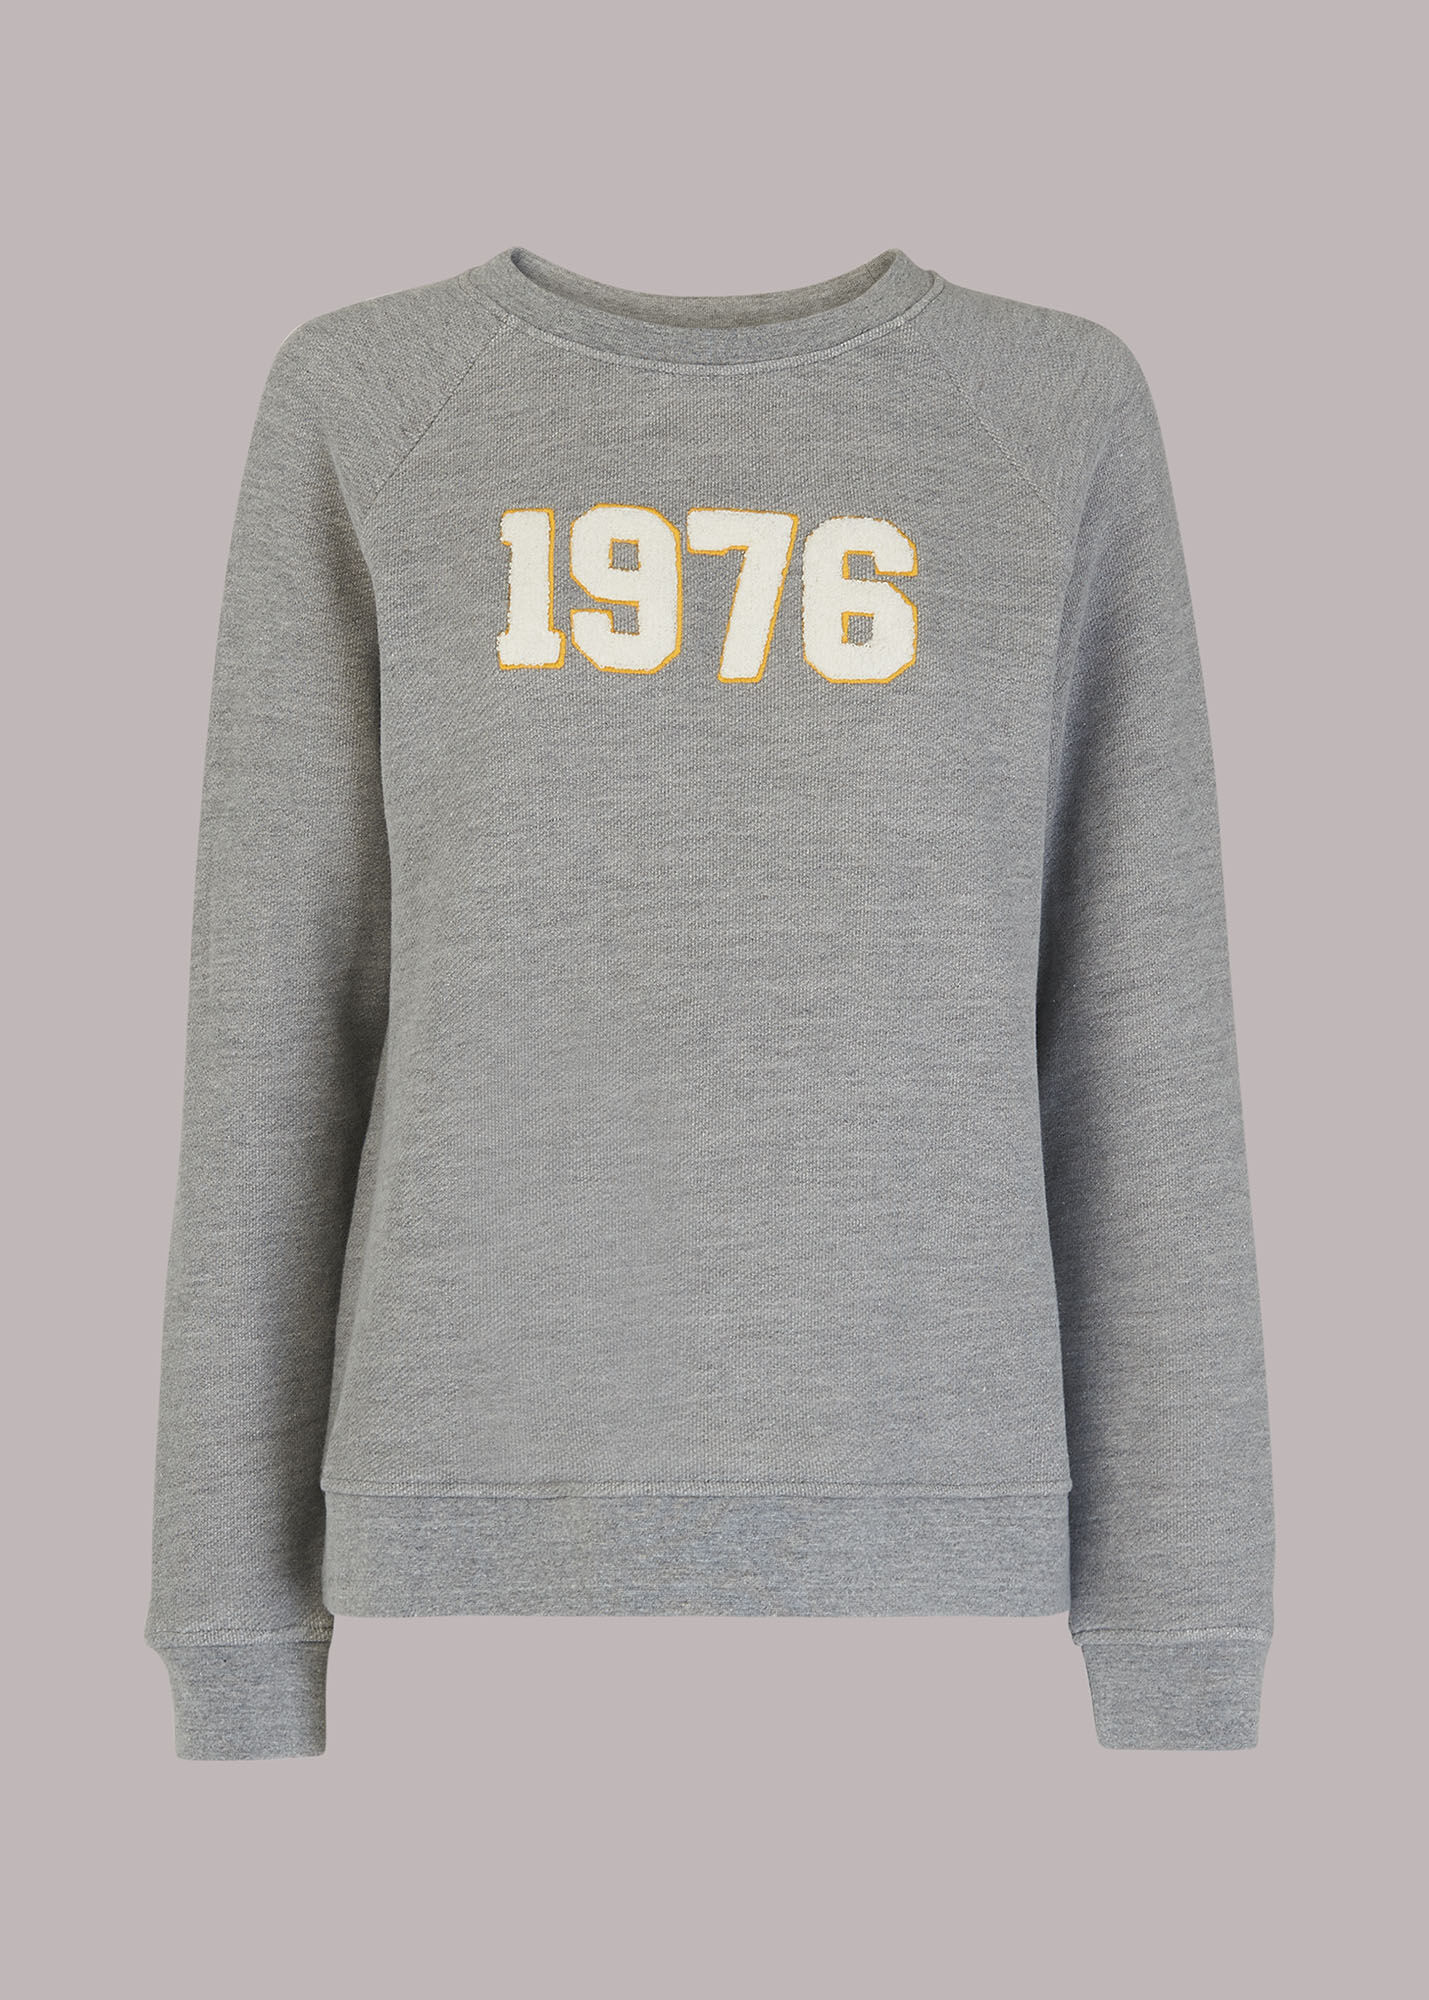 Grey 1976 Sweatshirt | WHISTLES | Whistles